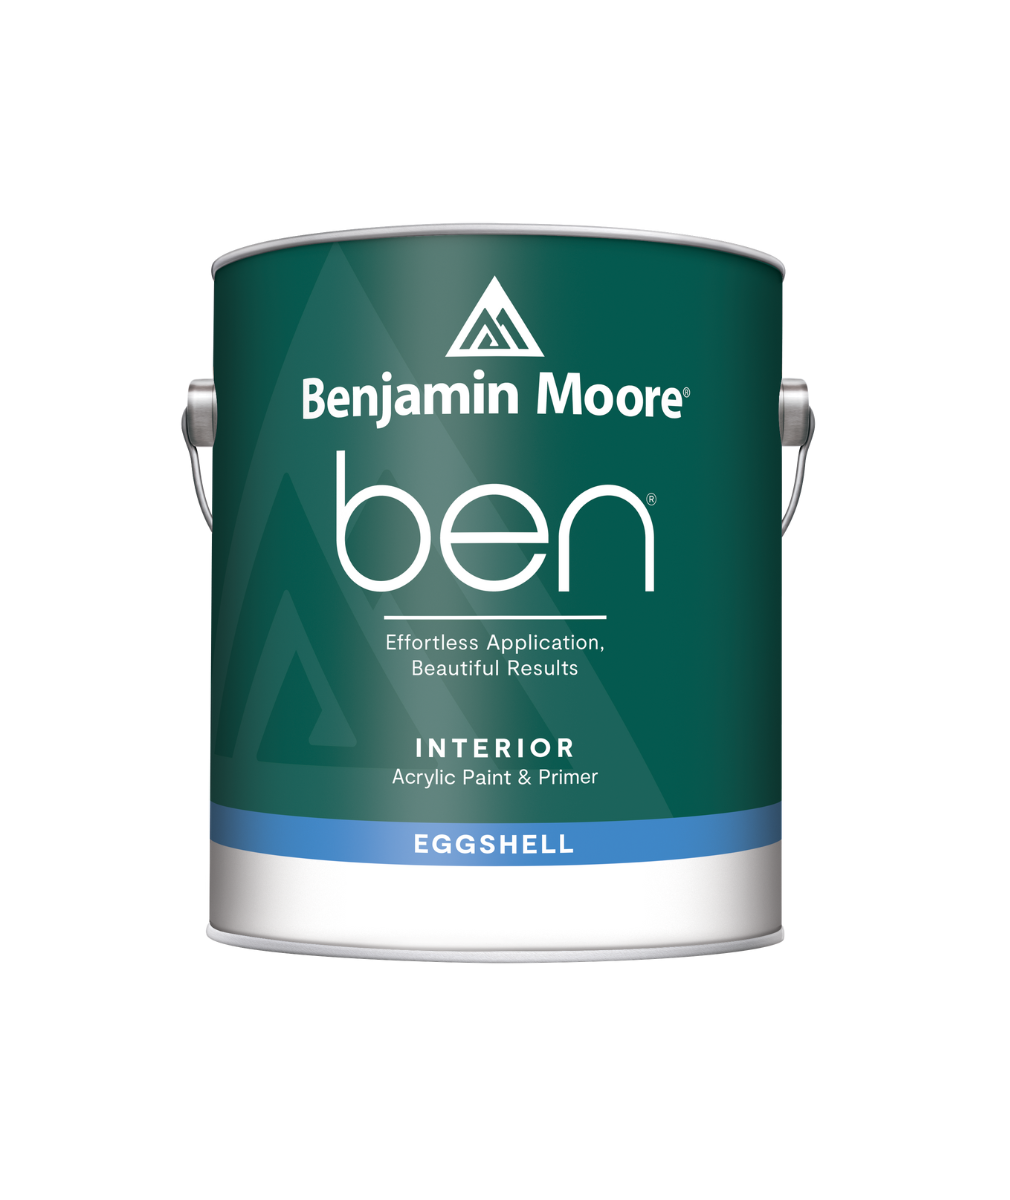 Benjamin Moore ben eggshell Interior Paint available at Wallauer Paint & Design.